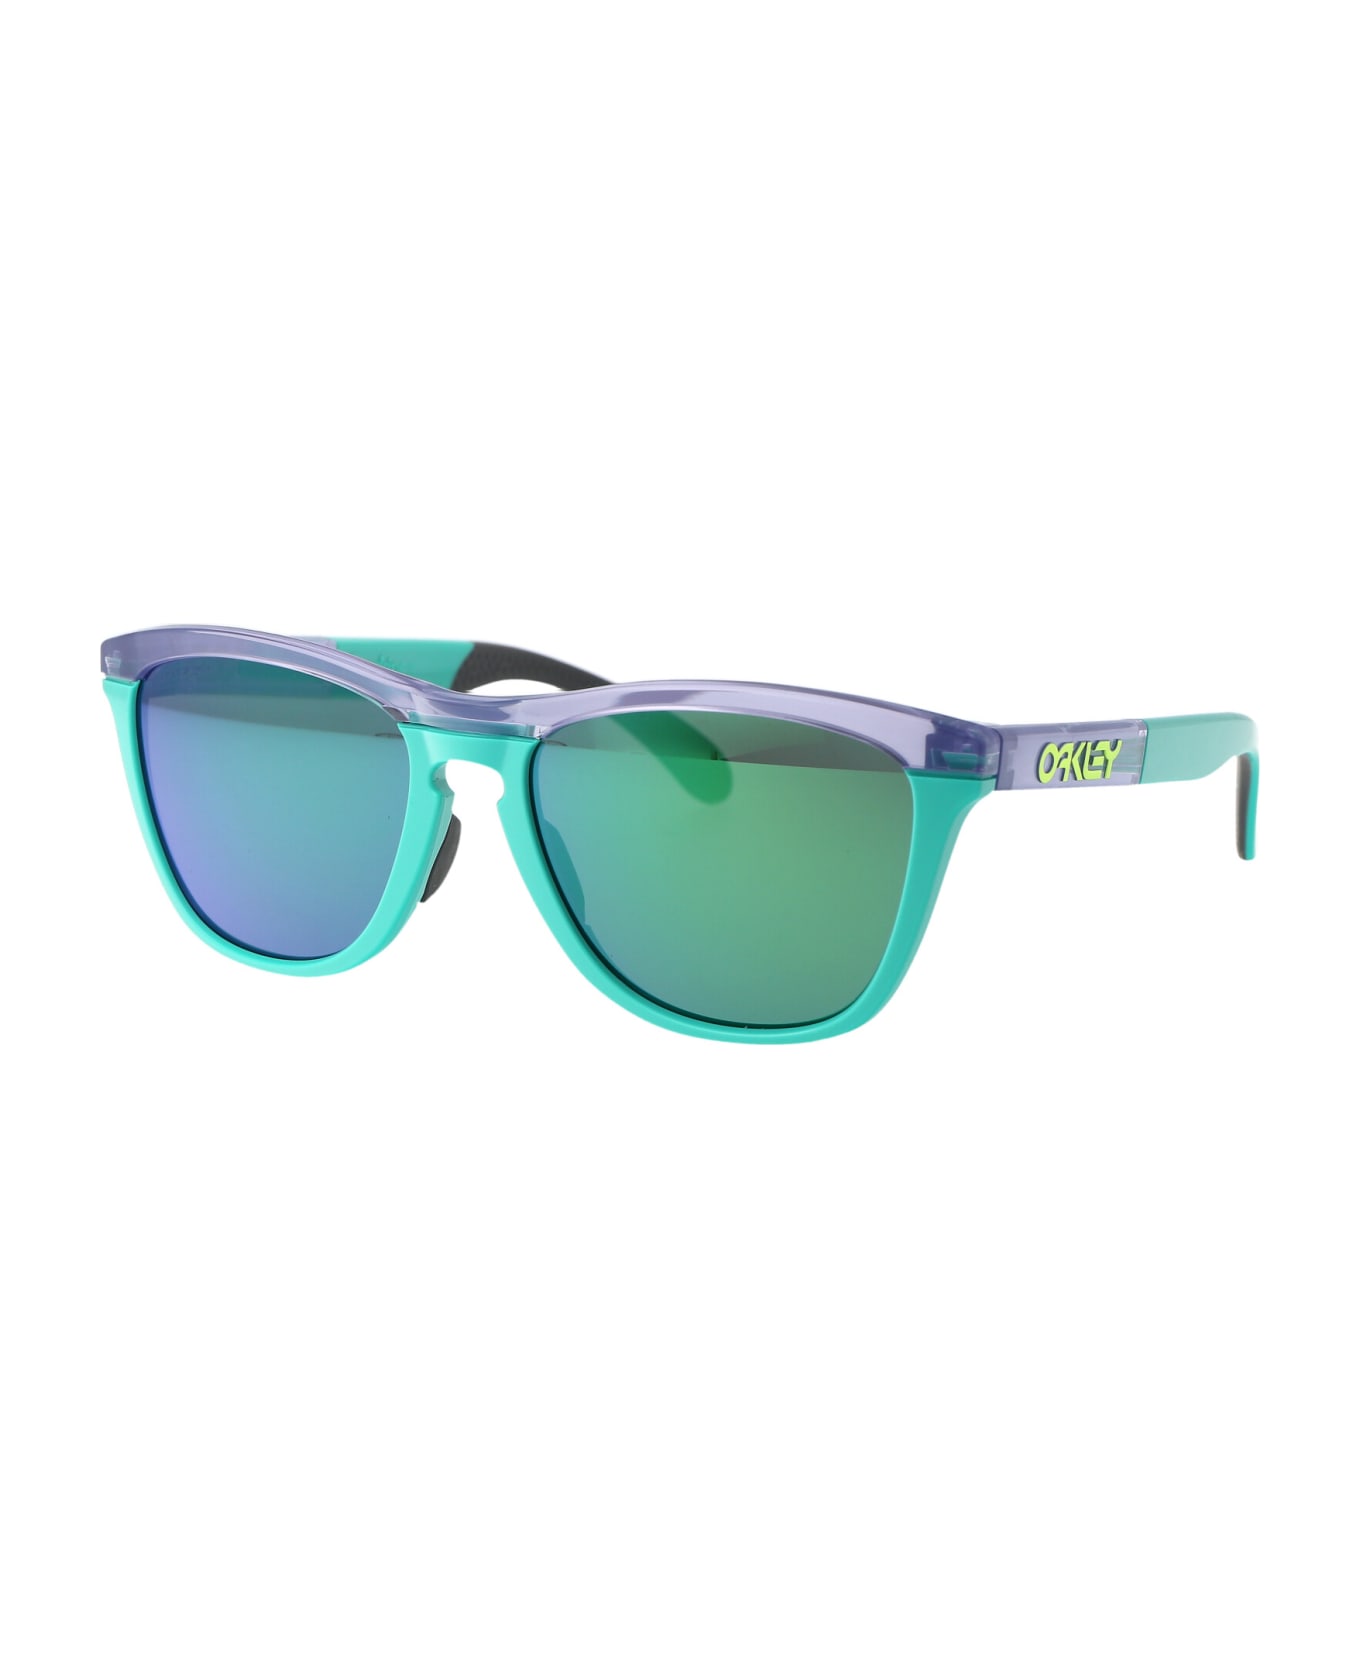 Oakley Frogskins Range Sunglasses - Turquoise